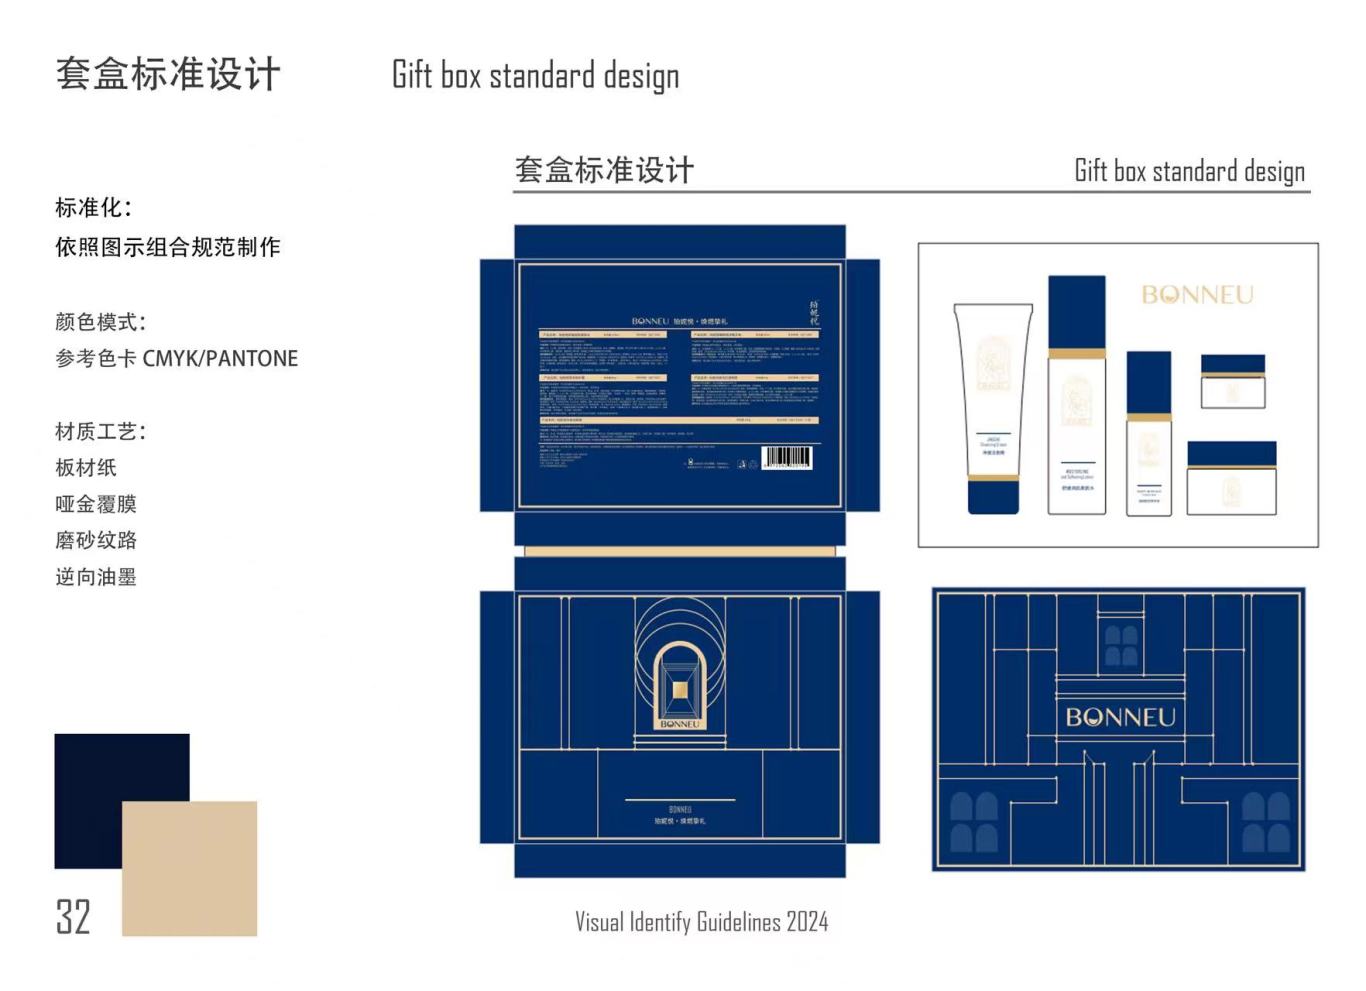 BONNEU国姿铂妮悦 民族护肤品牌 包装设计及品牌策划图31